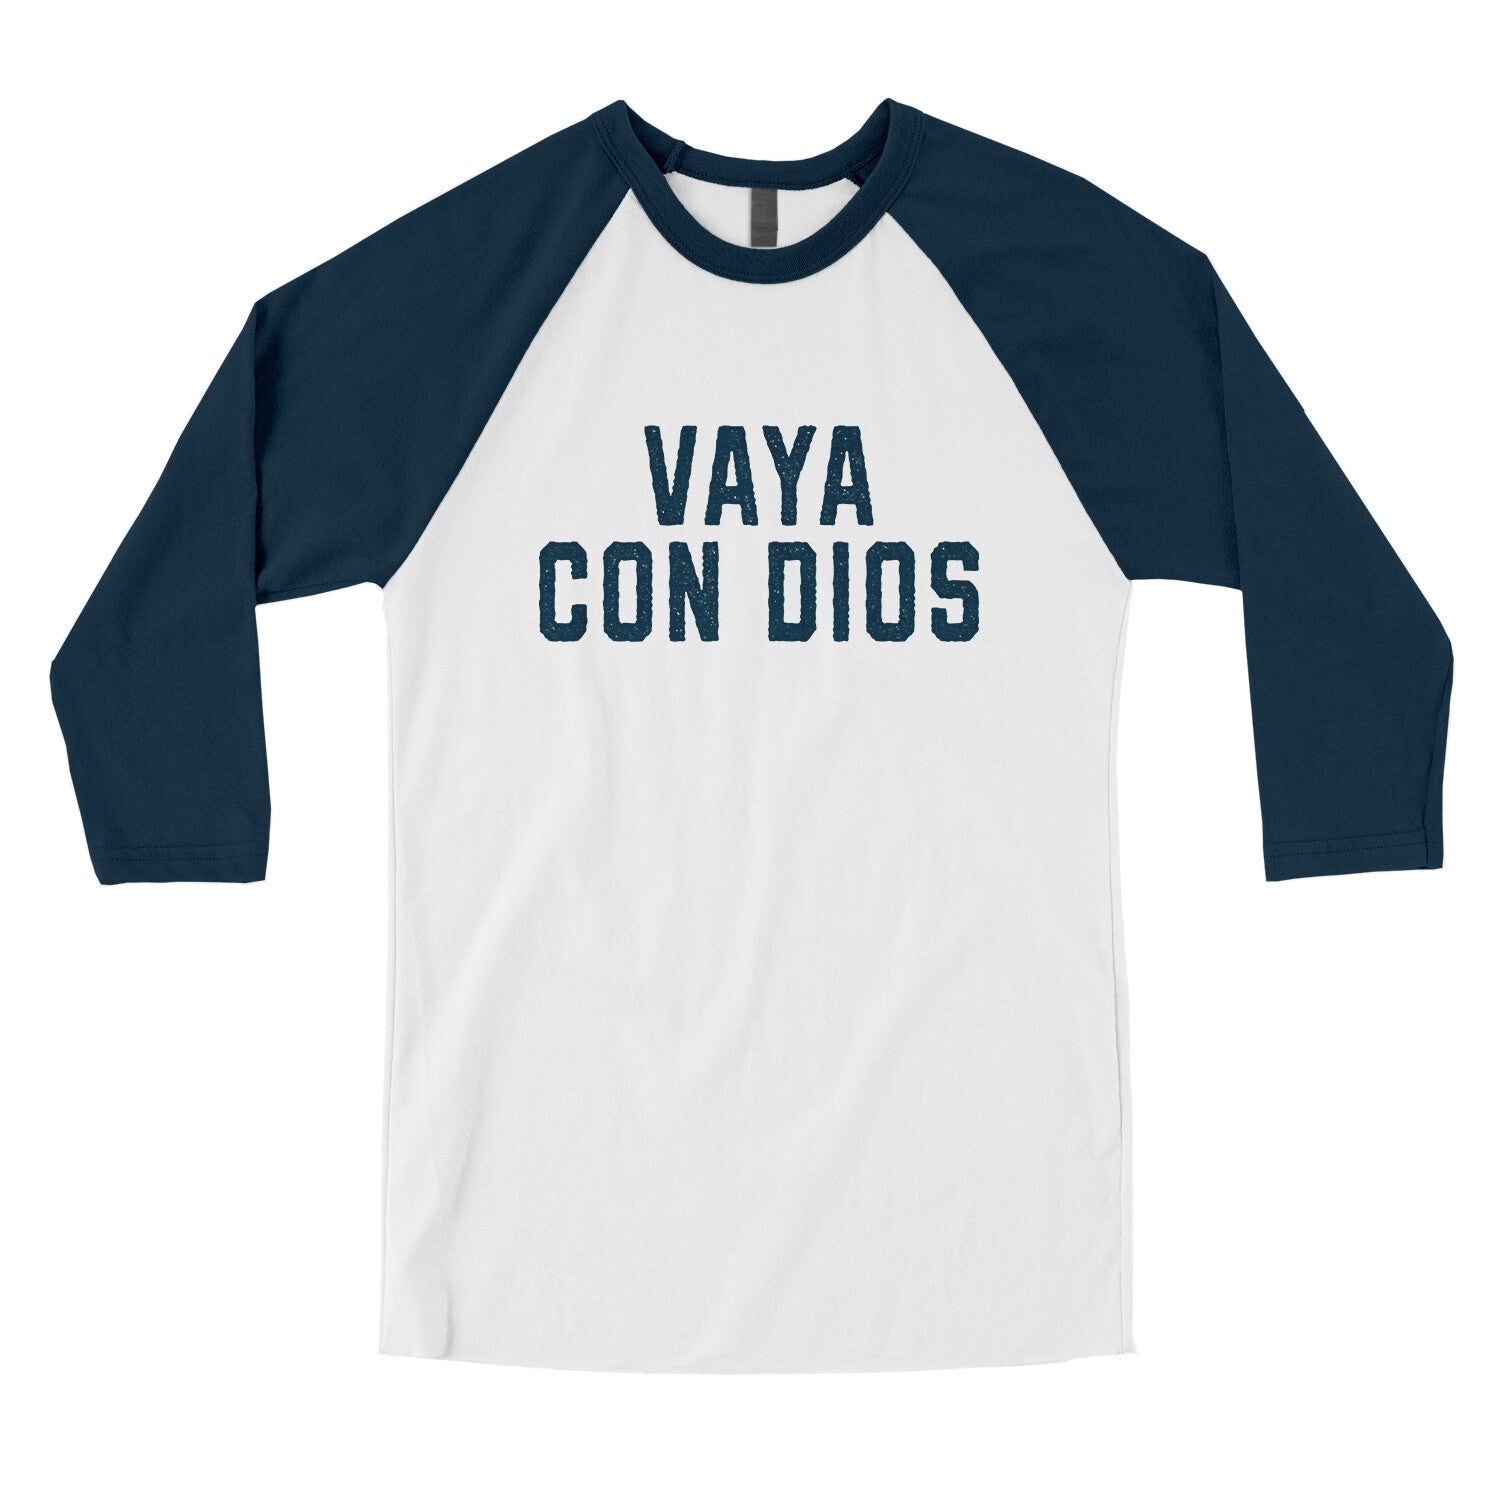 Vaya Con Dios in White with Navy Color